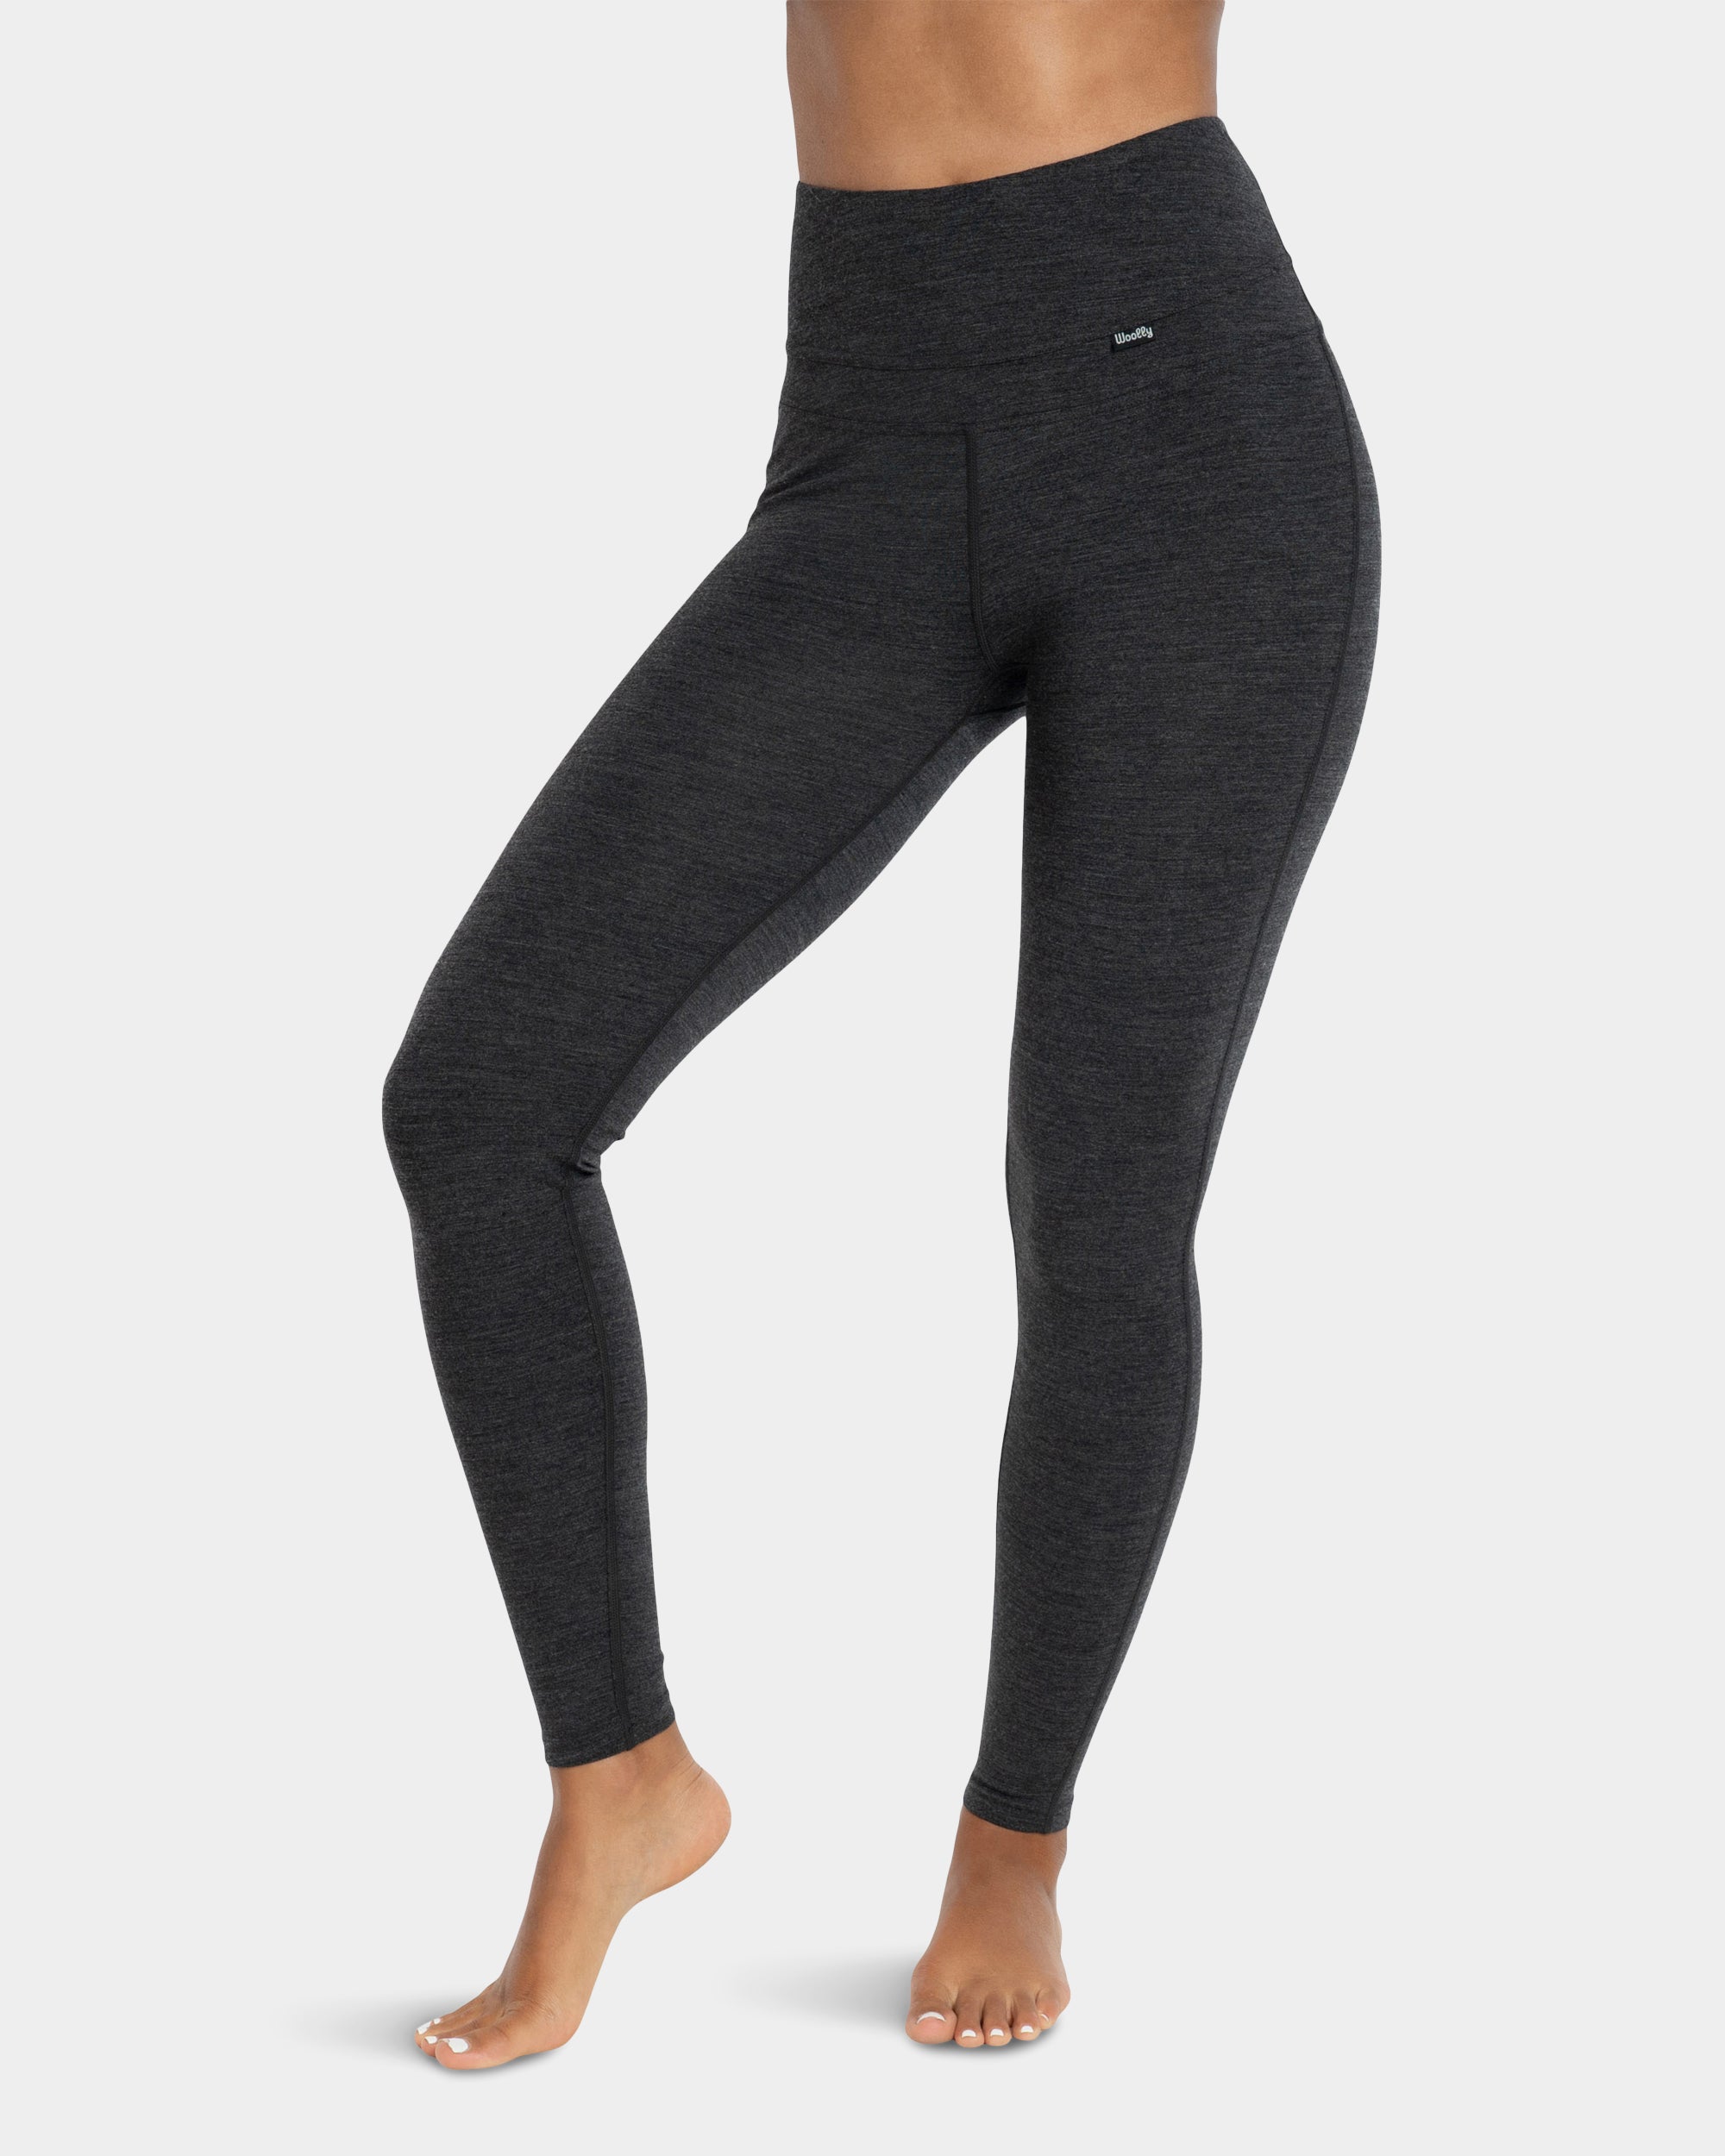 jsaierl Super Thick Cashmere Leggings for Women,Premium Women's Fleece  Lined Legging Wool Warm High Waist Elastic Yoga Slim Pant